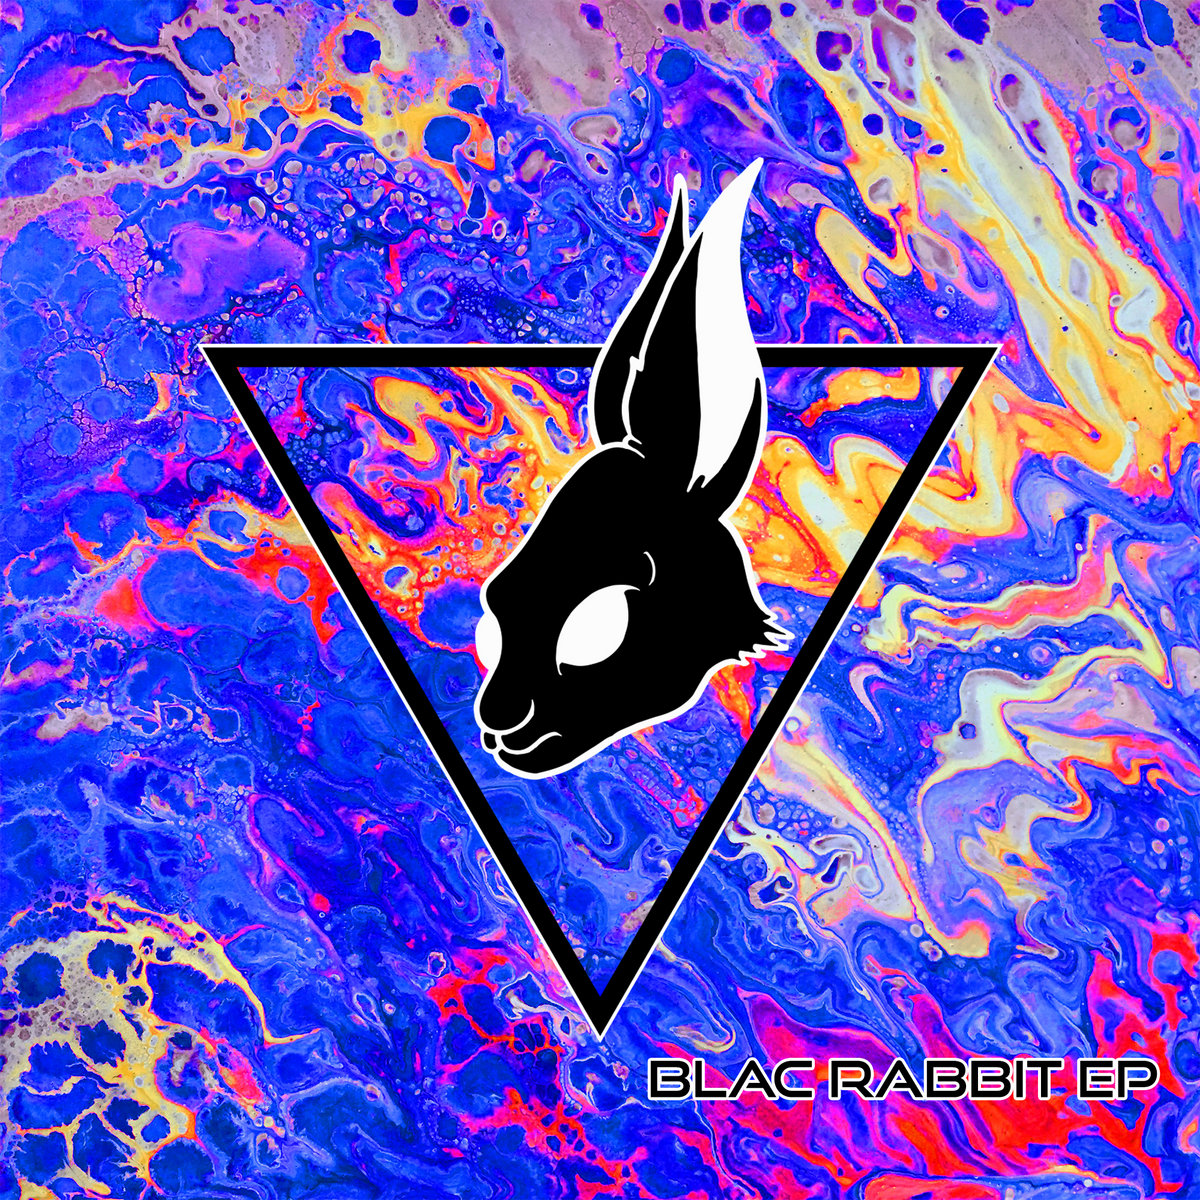 Blac Rabbit Blac Rabbit EP cover artwork